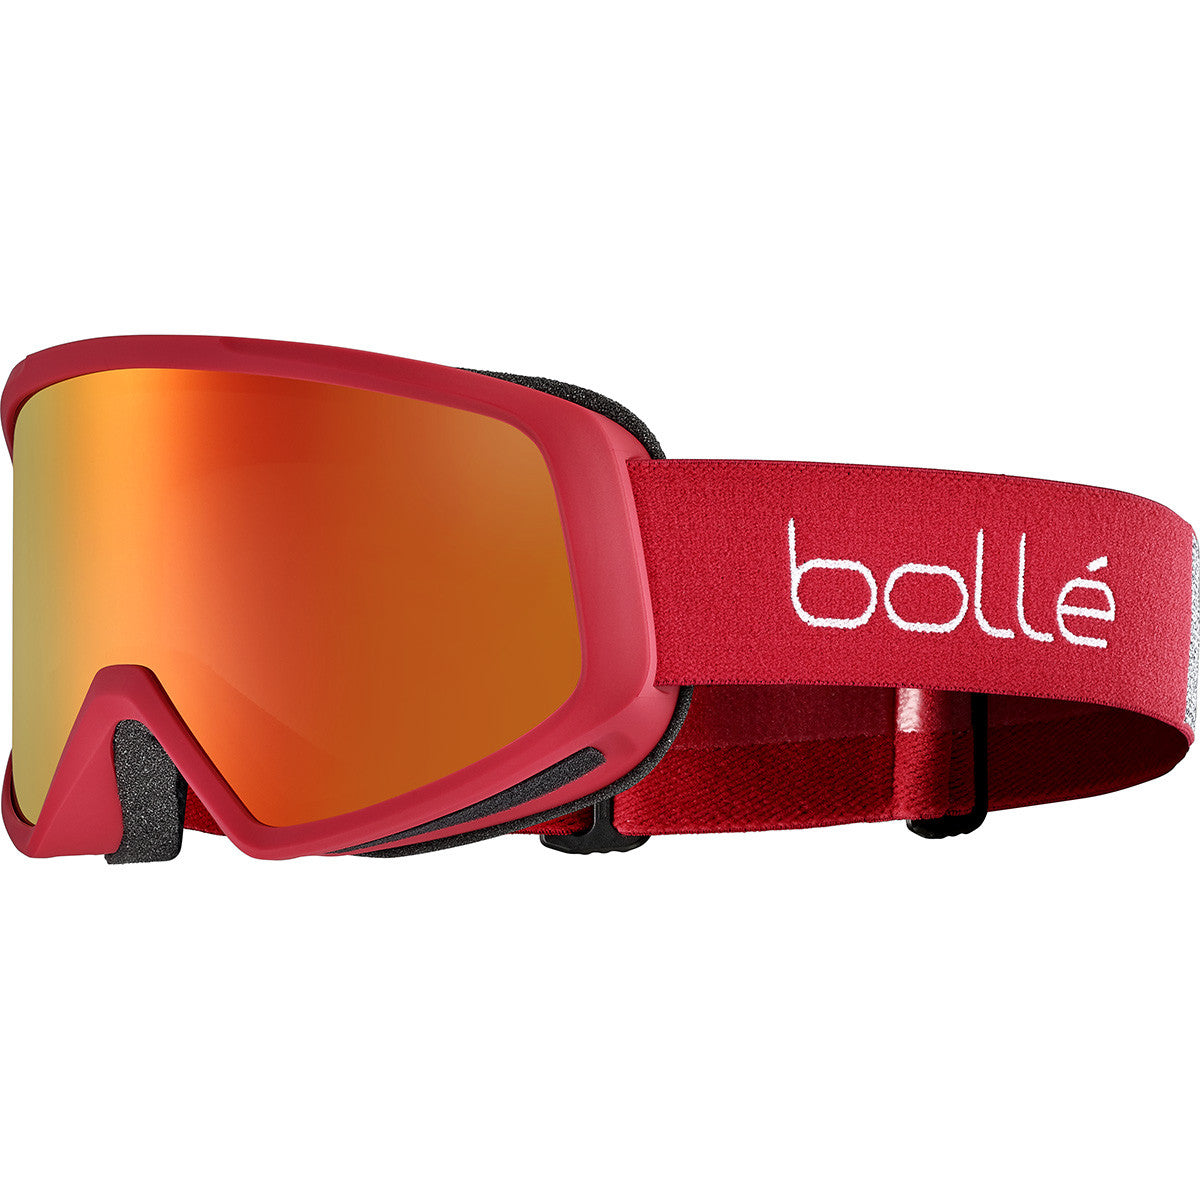 Bolle Bedrock Plus Goggles  Carmine Red Medium One size